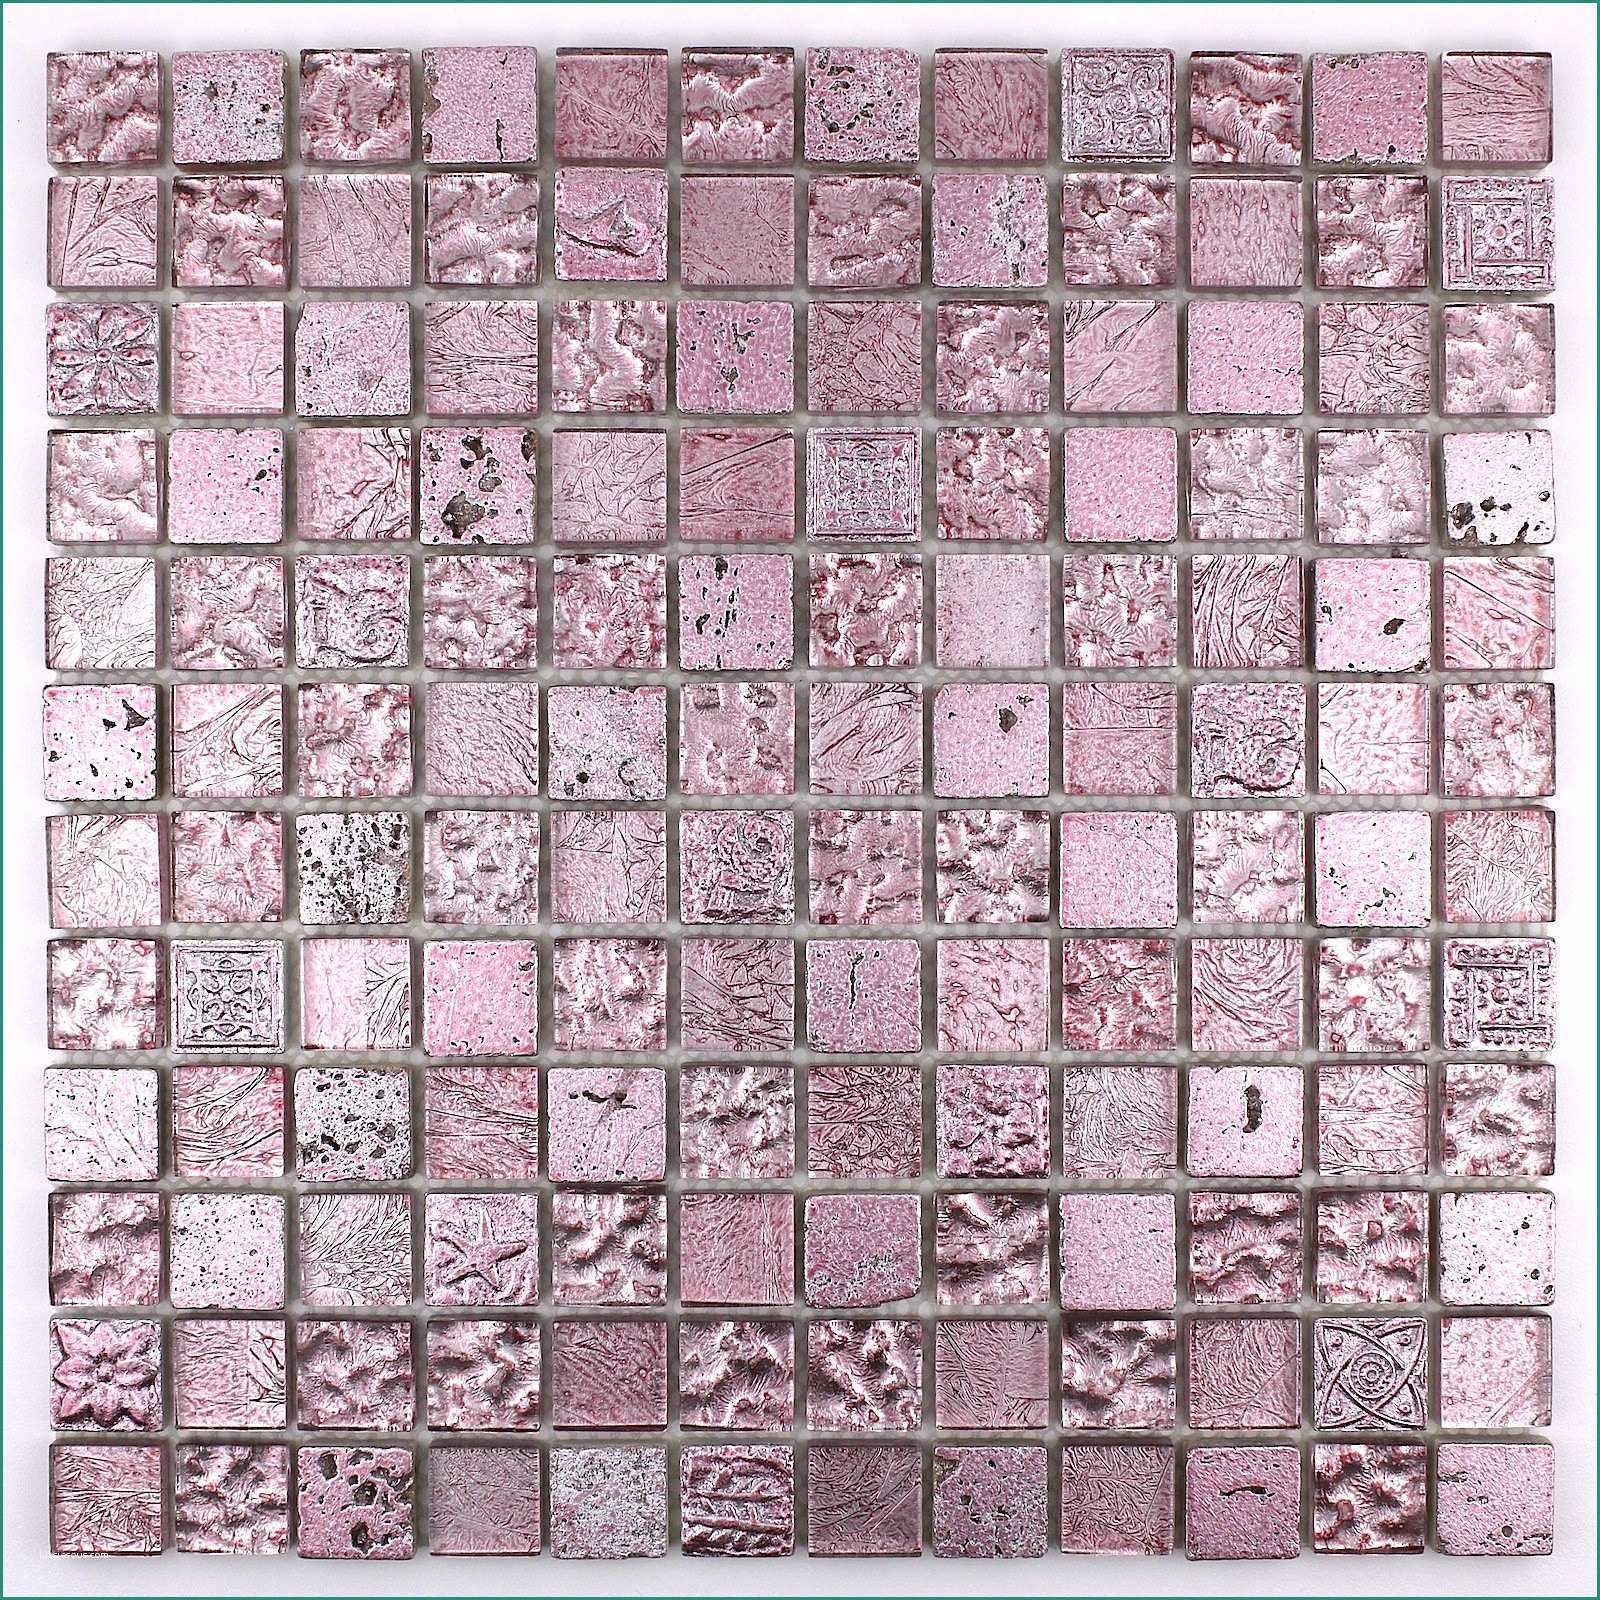 Tessere Mosaico Leroy Merlin E Piastrelle Mosaico Bagno Prezzi Piastrelle Per Bagno Prezzi Bagni